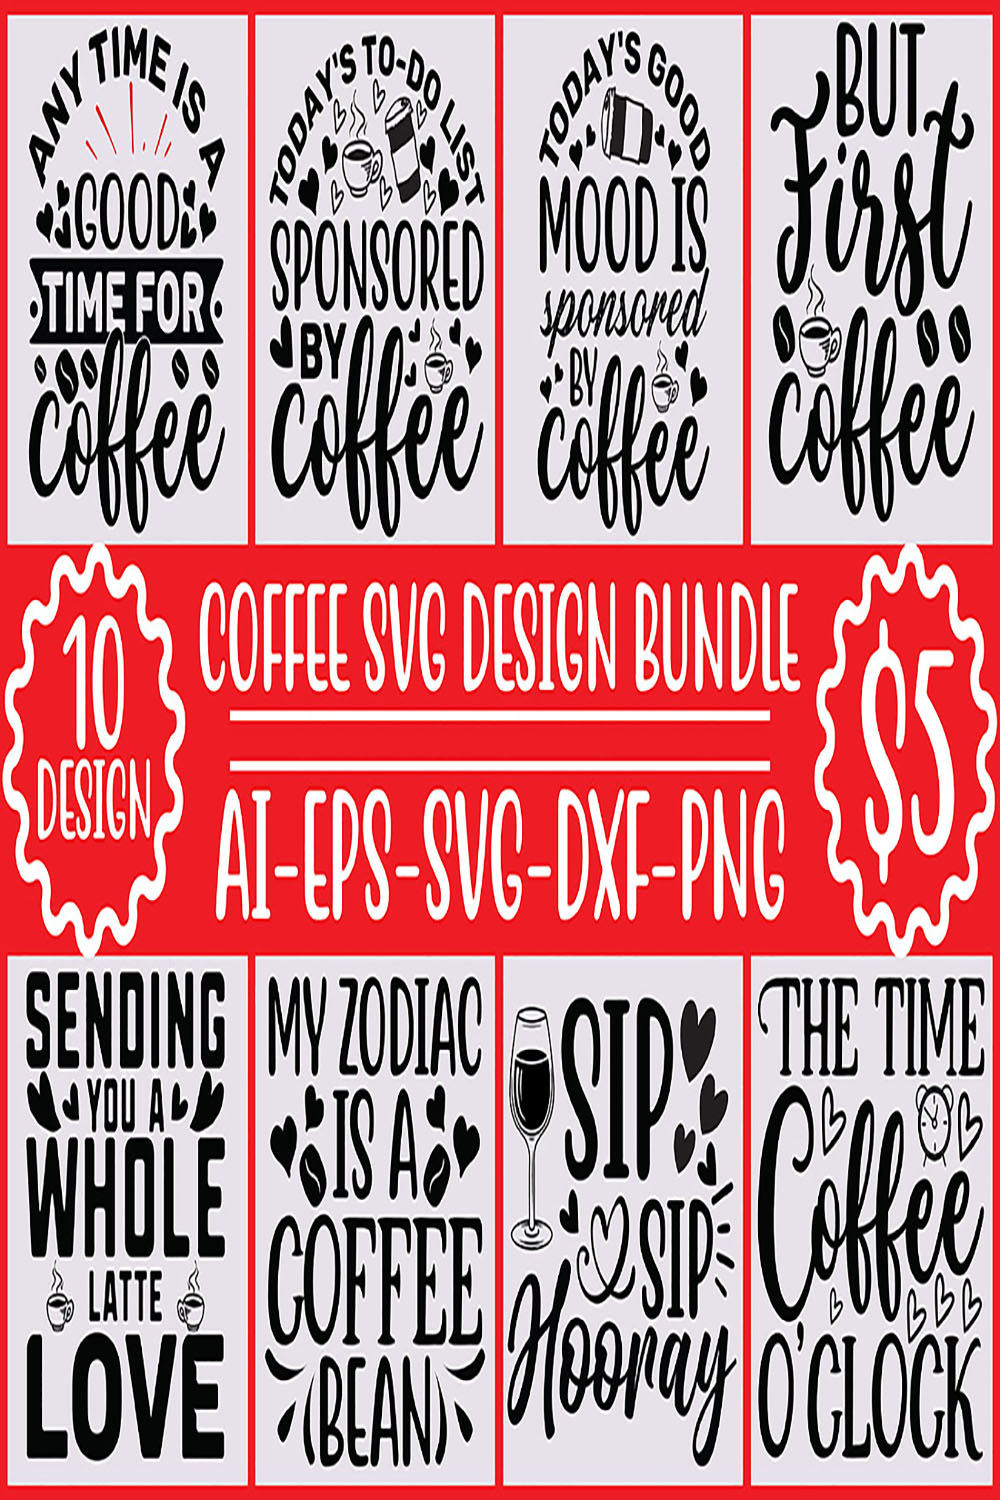 10 Coffee SVG Design Bundle Vector Template pinterest preview image.